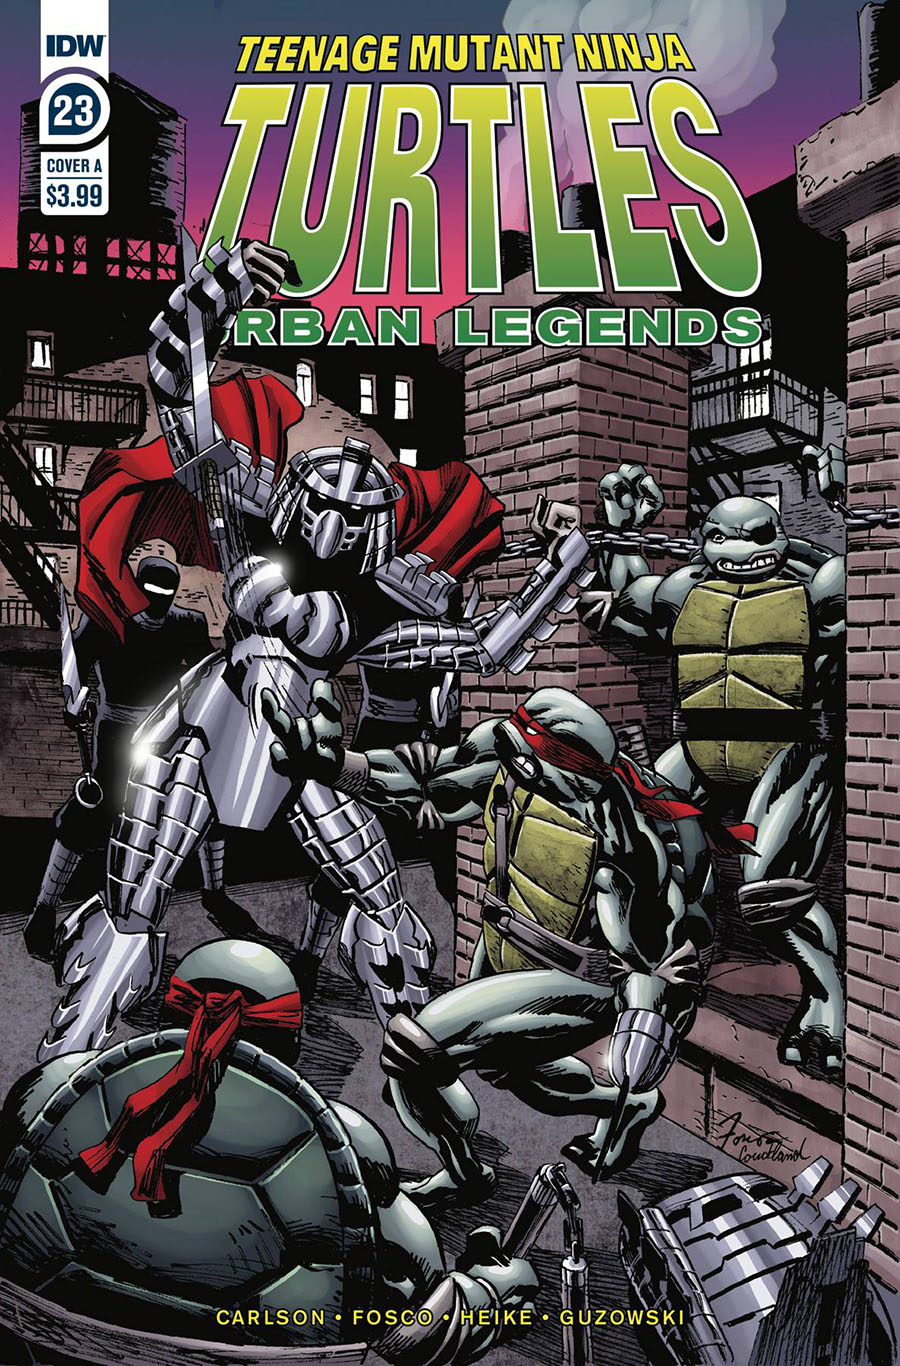 Teenage Mutant Ninja Turtles Urban Legends #23 Cover A Regular Frank Fosco Cover